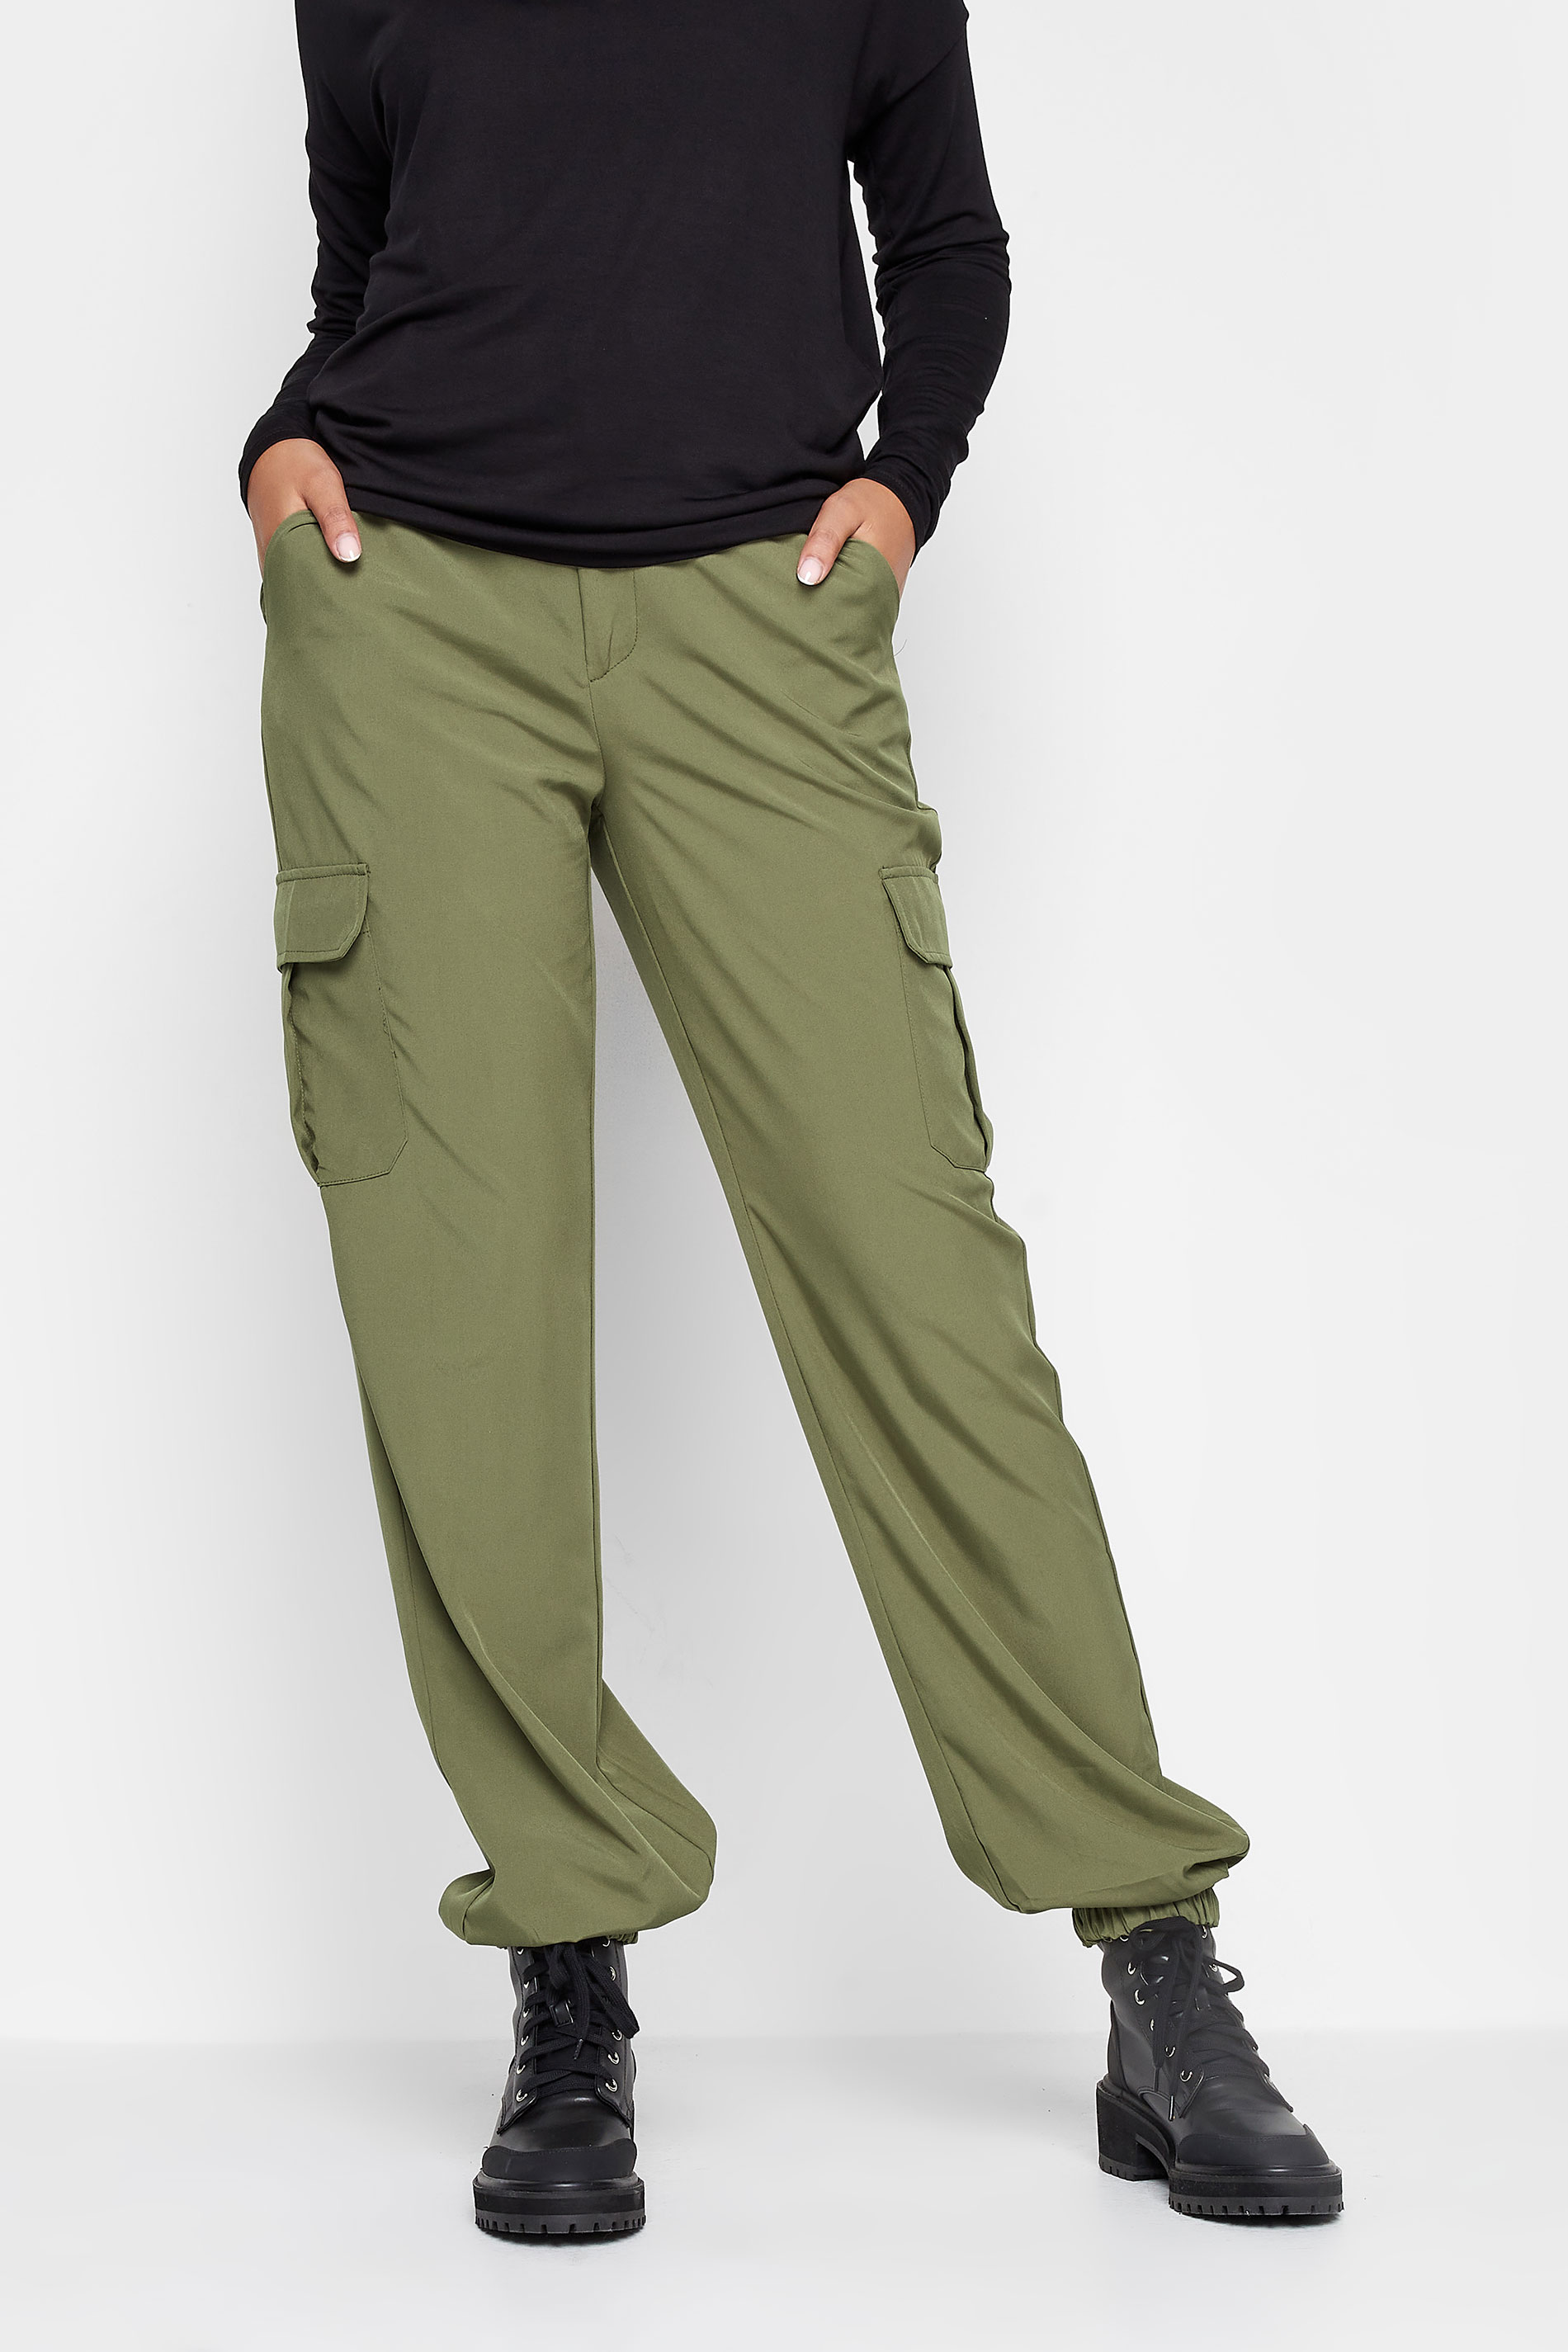 LTS Tall Women's Khaki Green Cuffed Cargo Trousers | Long Tall Sally 1